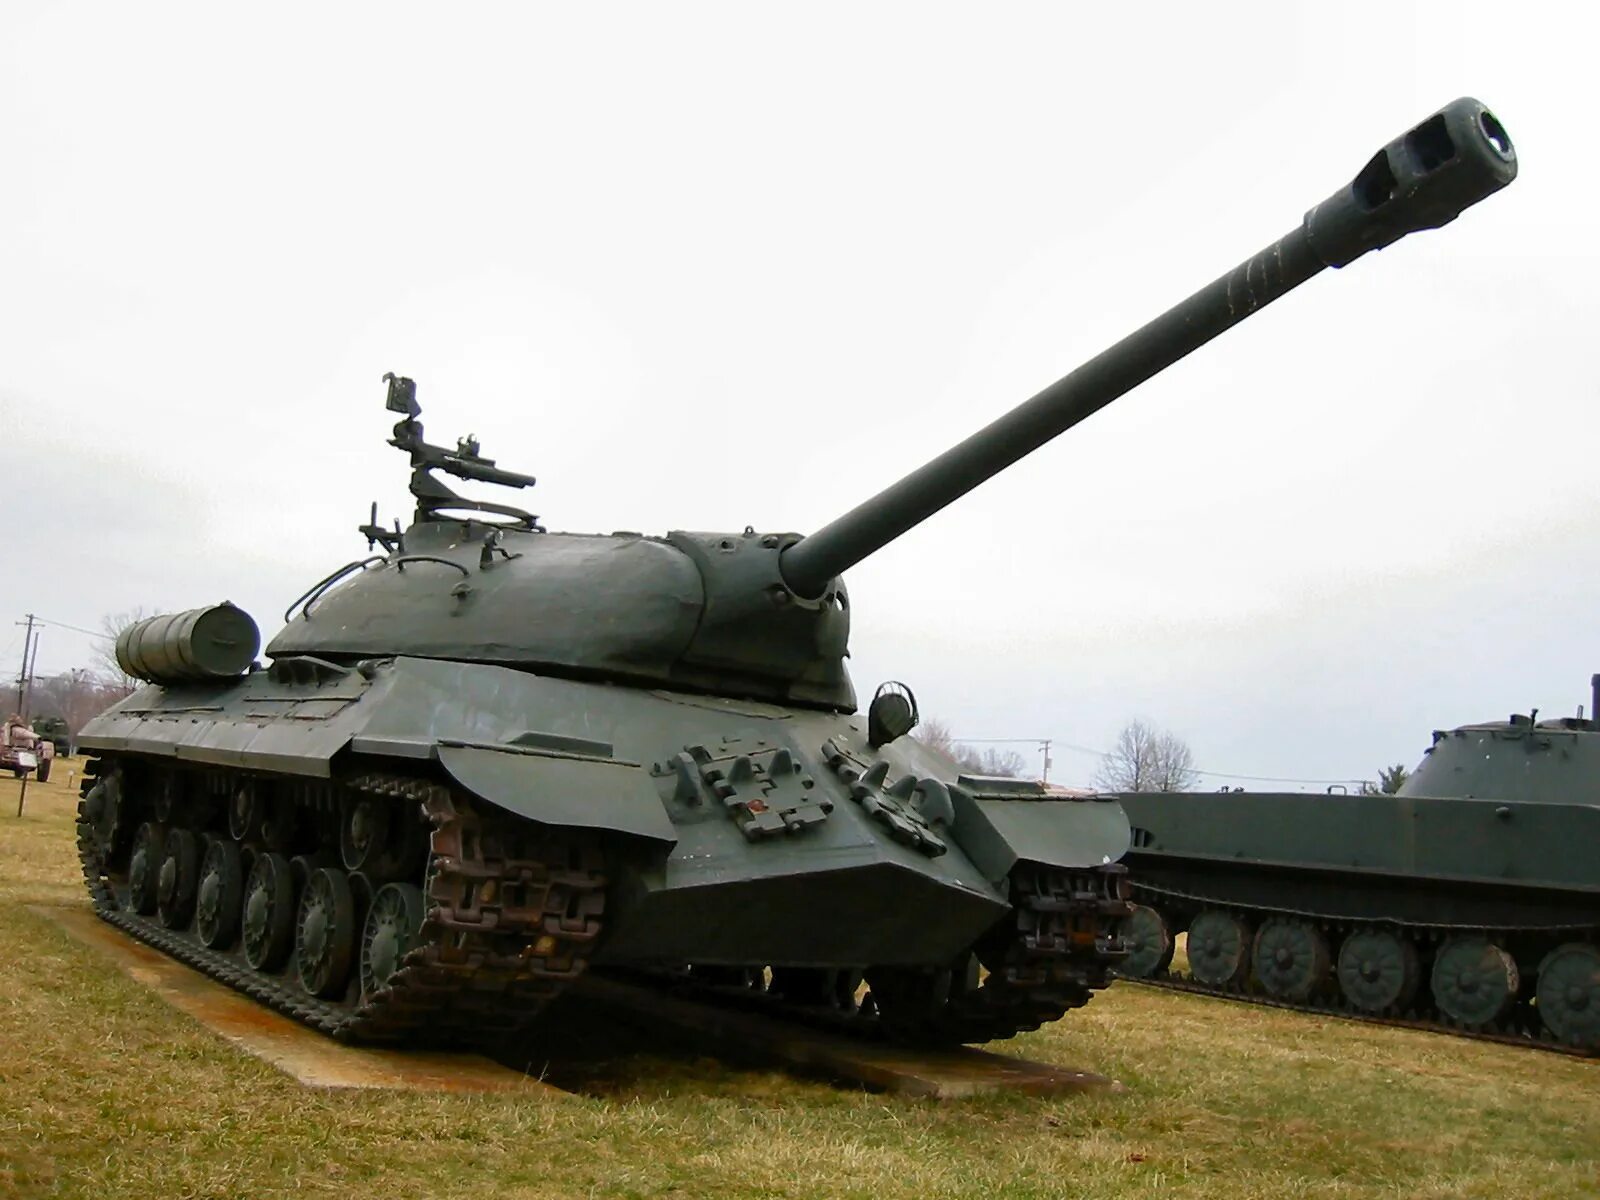 Фотогалереи ис. Танк ИС-3м. Танк Иосиф Сталин 3. Тяжелый танк ИС-3м. ИС 3 Калибр.